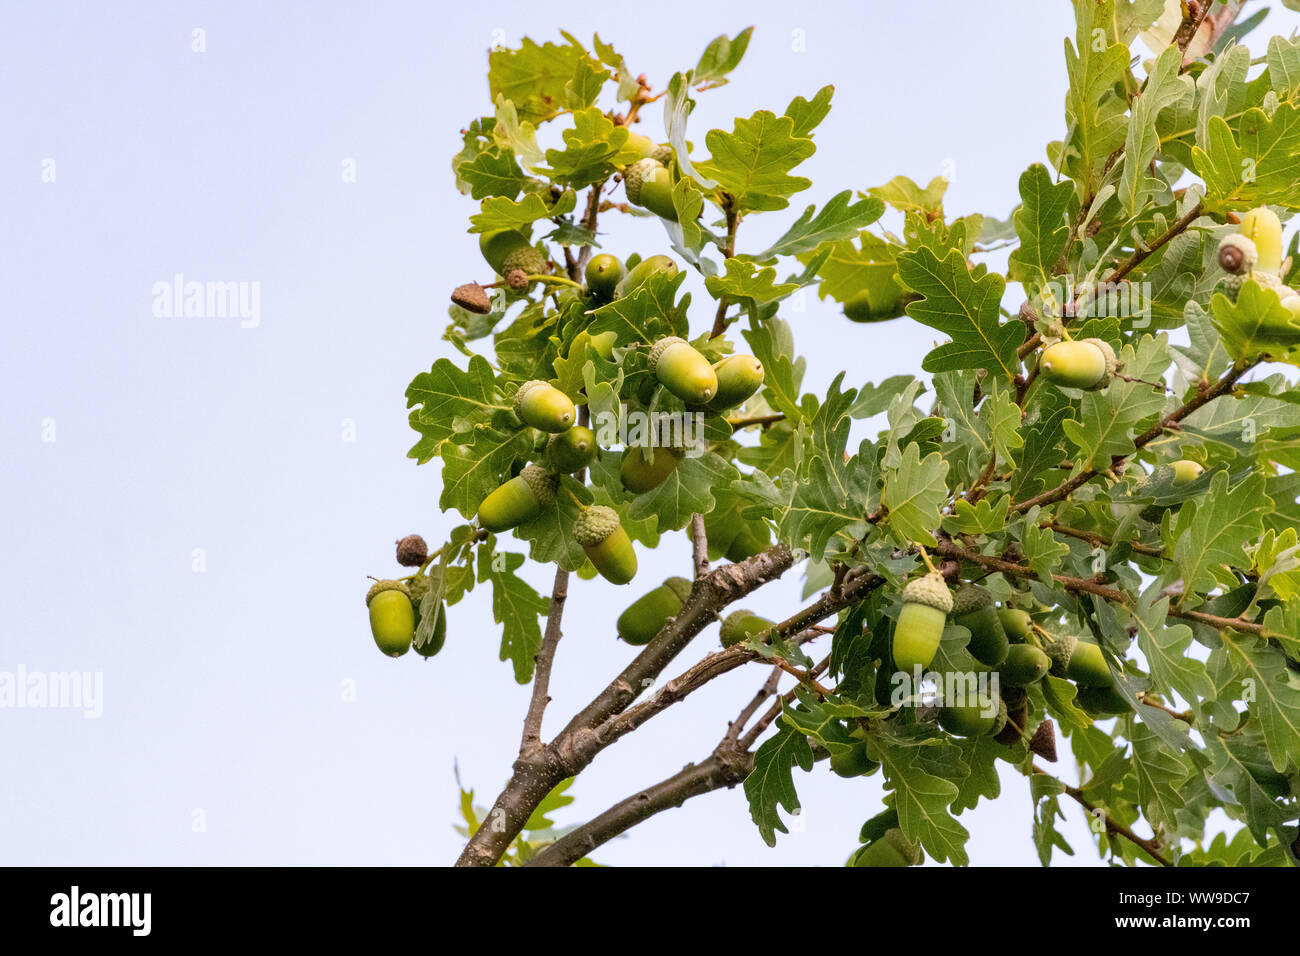 Acorns on oak tree branches Stock Photo